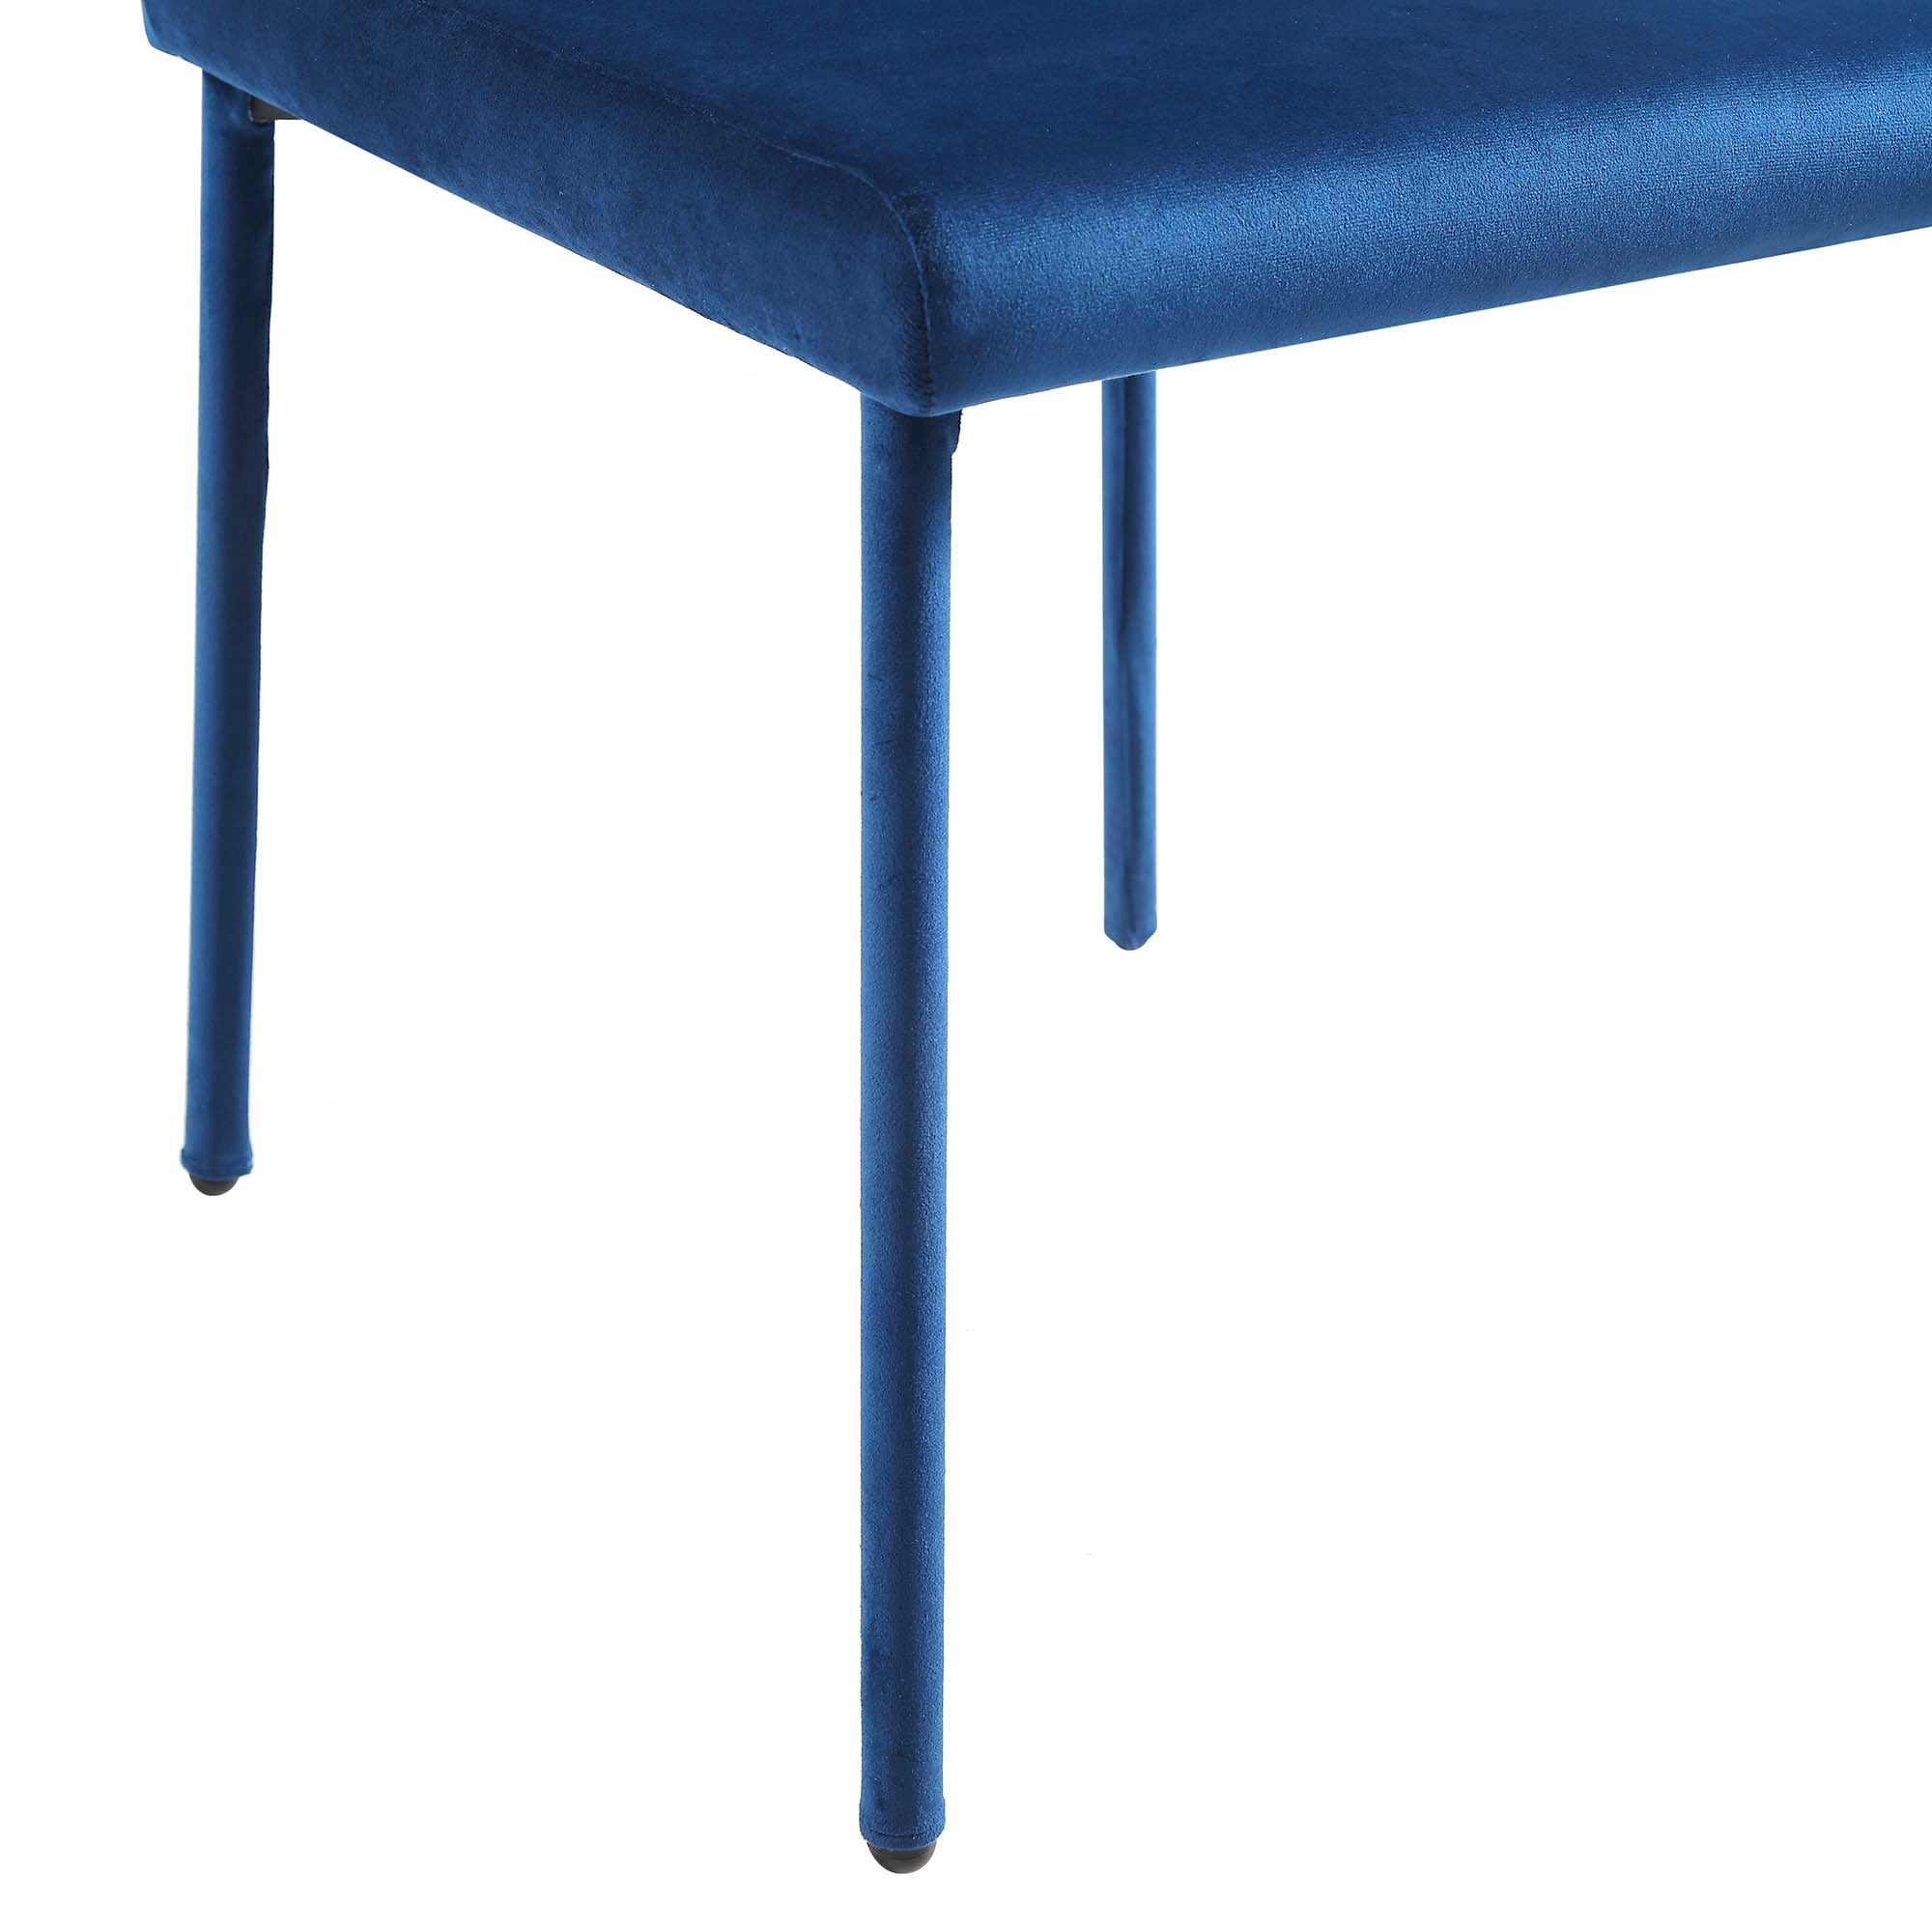 Fernie Set of 2 Navy Blue Velvet Dining Chairs with Upholstered Legs